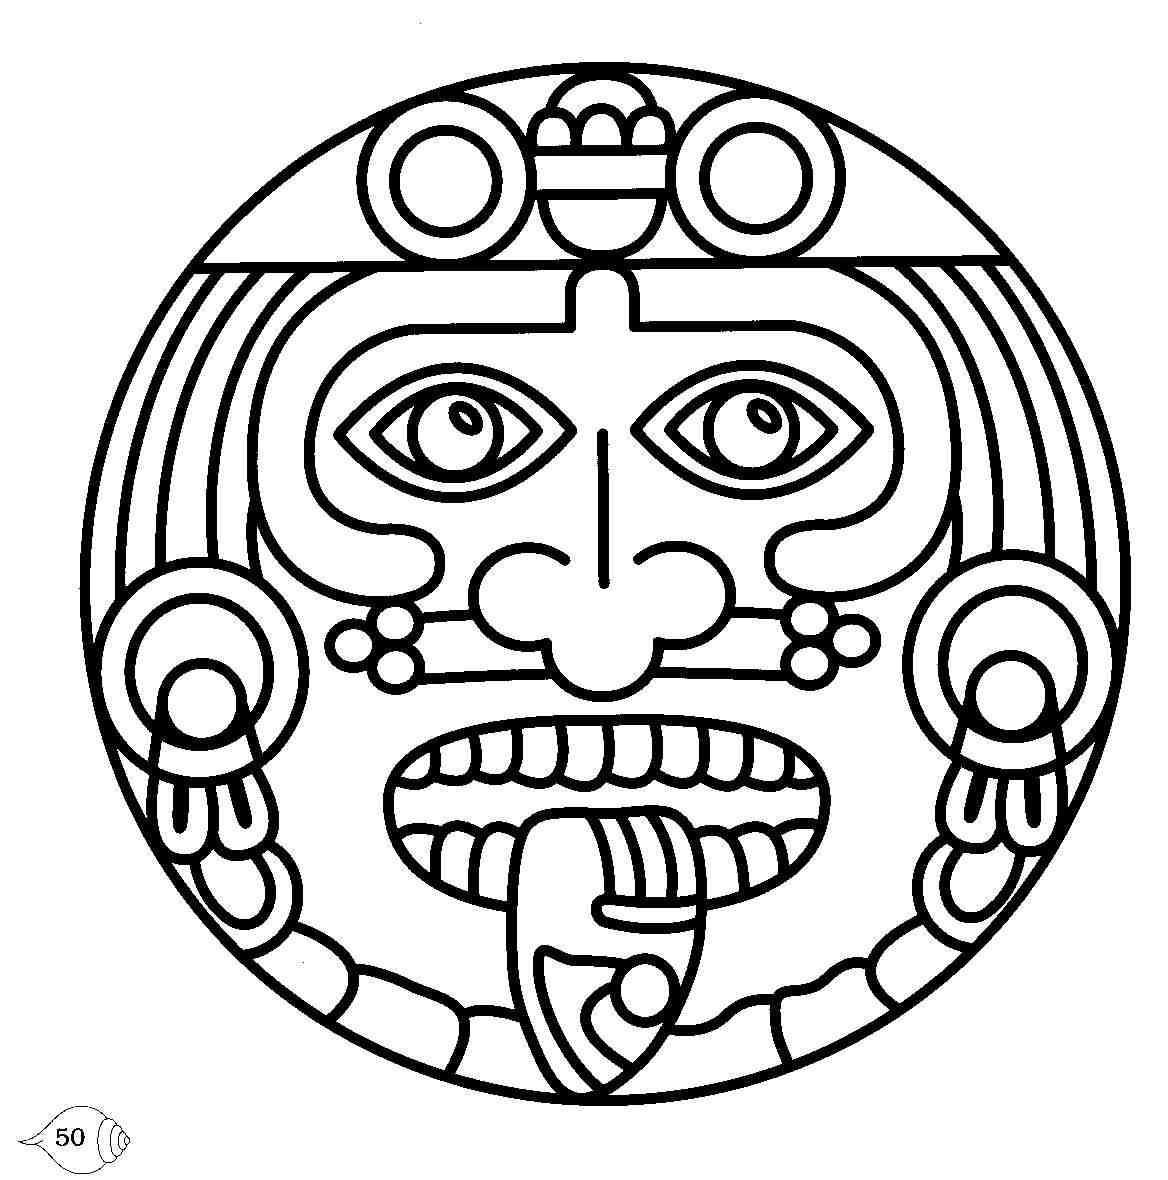 Aztec pattern | Symbols | Pinterest